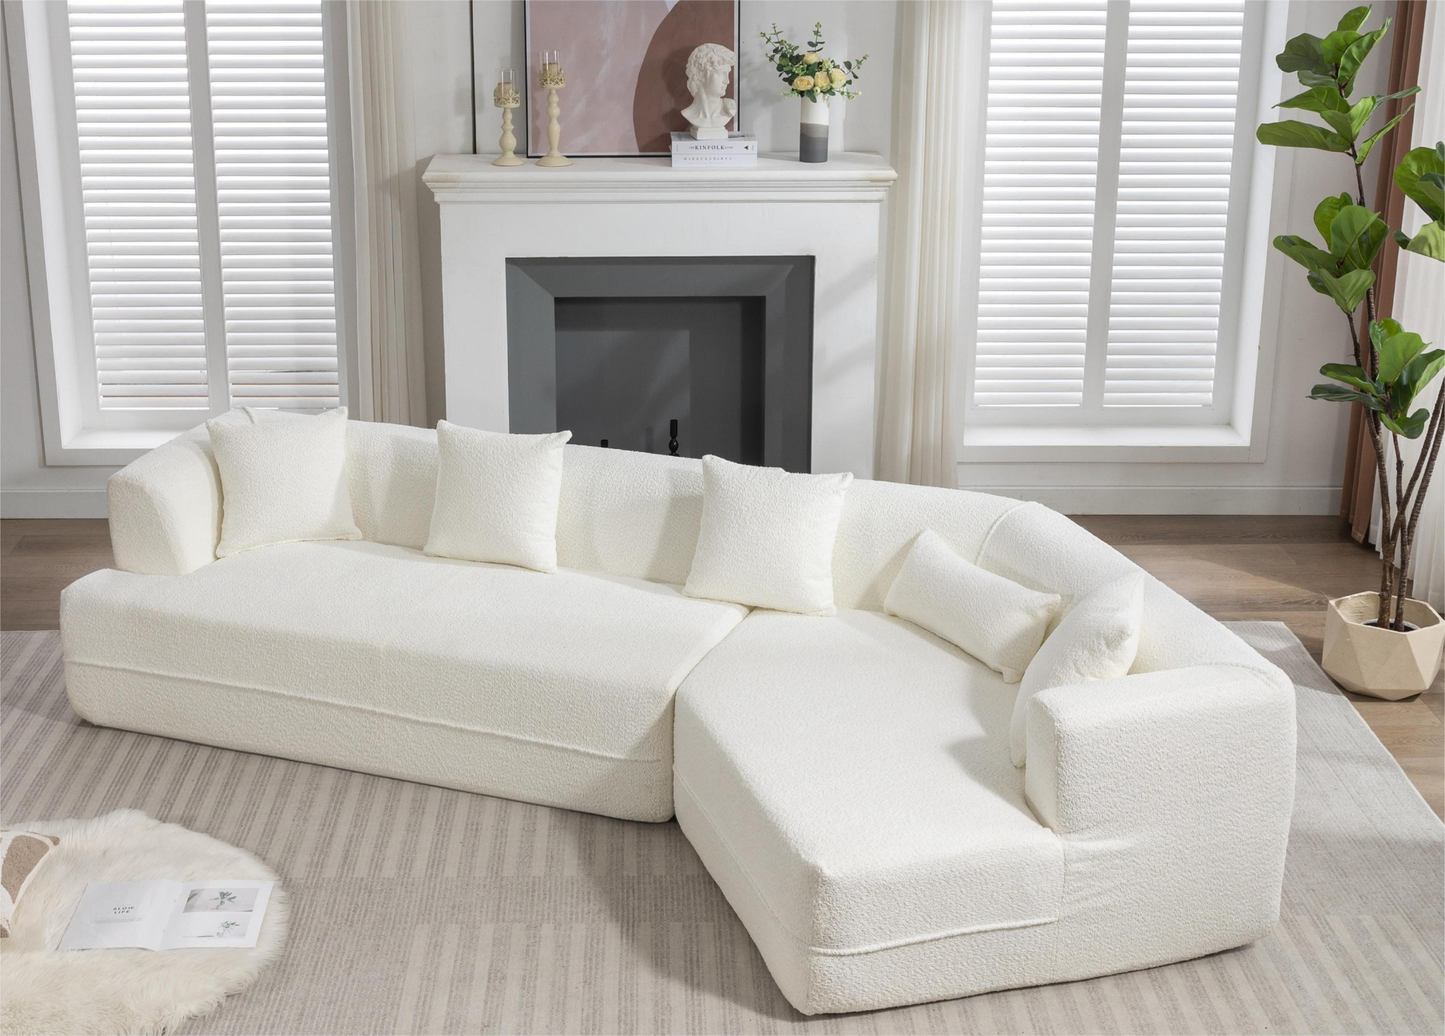 Modular Living room sofa set, modern minimalist style sofa, salon upholstered sleeper sofa, 2 PC free combination, round fiber fabric, anti-wrinkle fabric, creamy-white, Goodies N Stuff